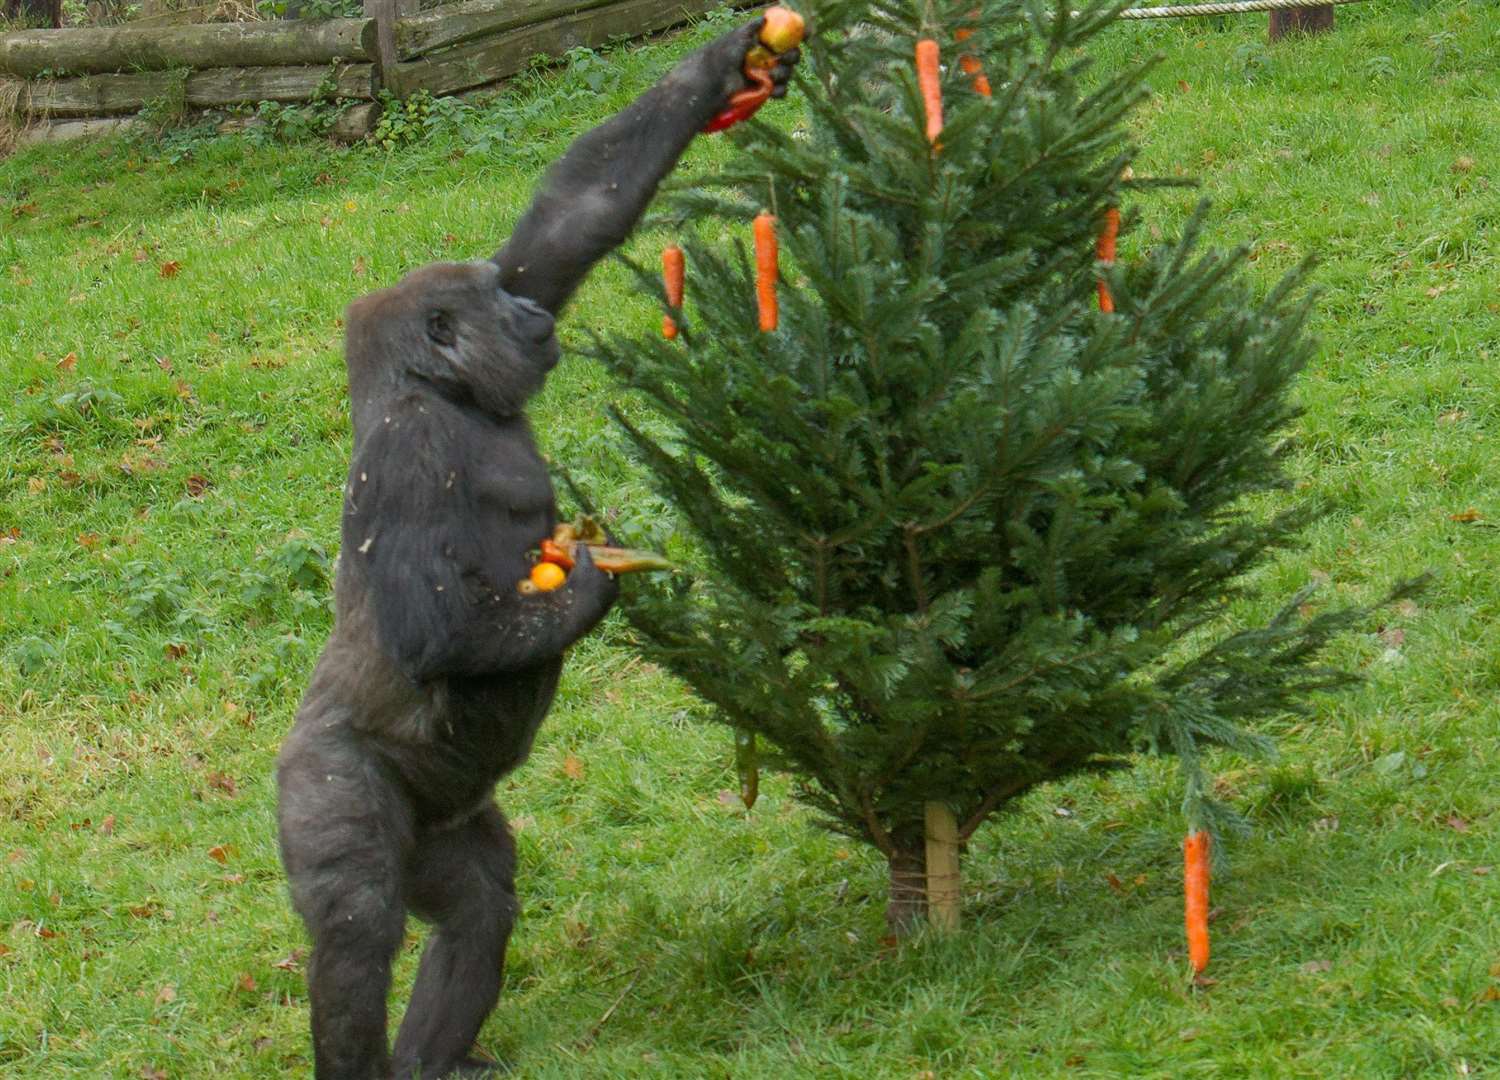 The gorillas enjoying Christmas at Port Lympne last year